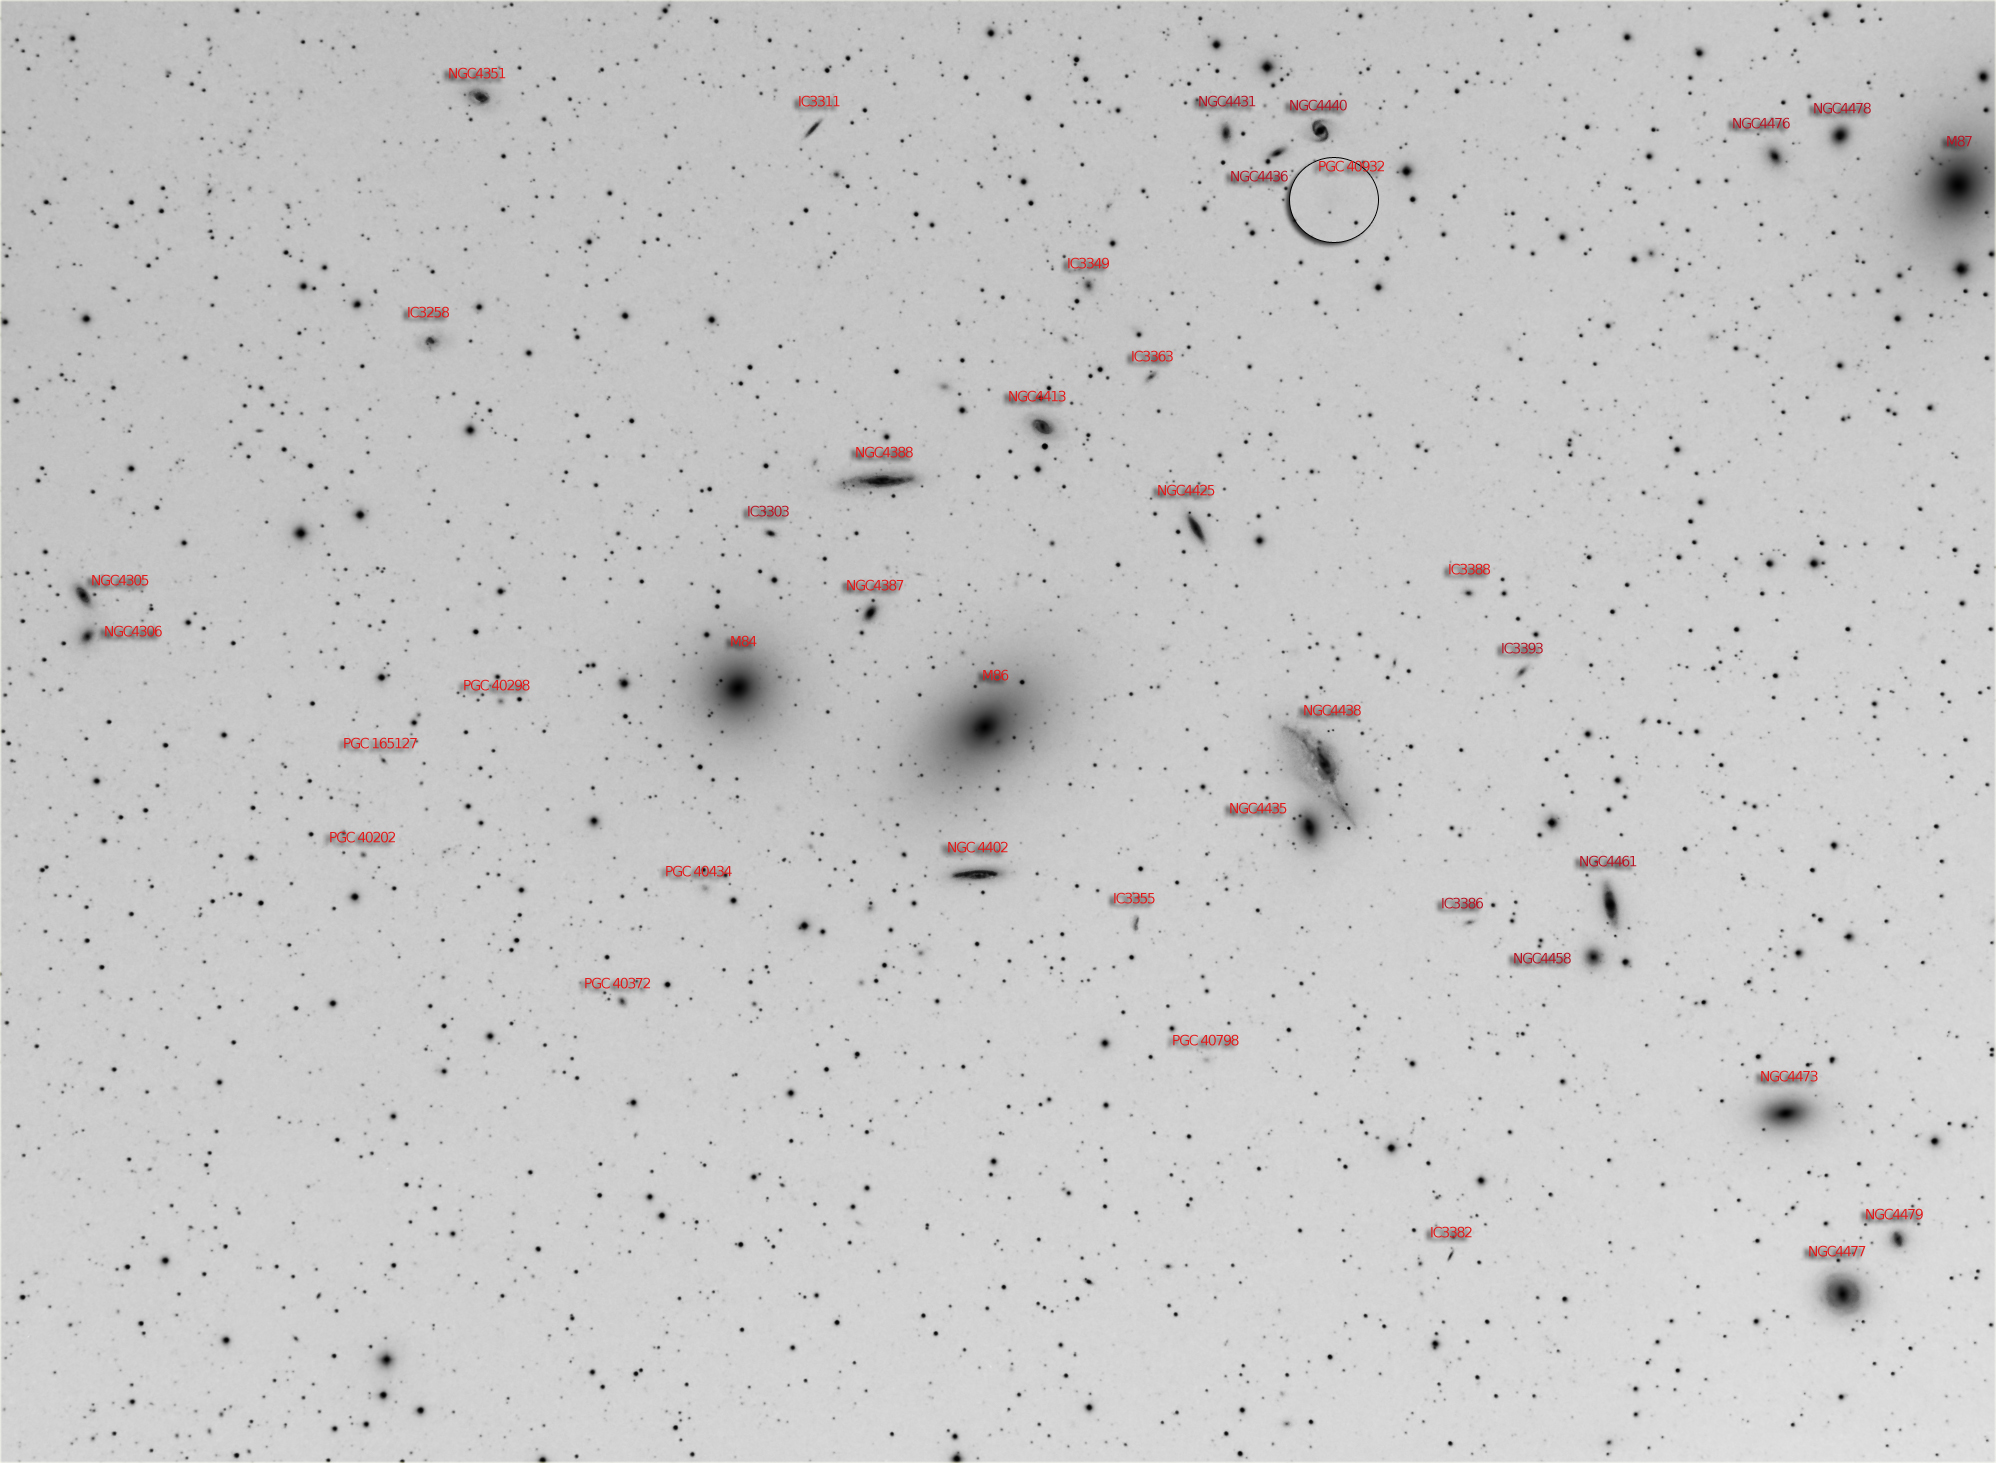 Virgo Galaxy Cluster Identification